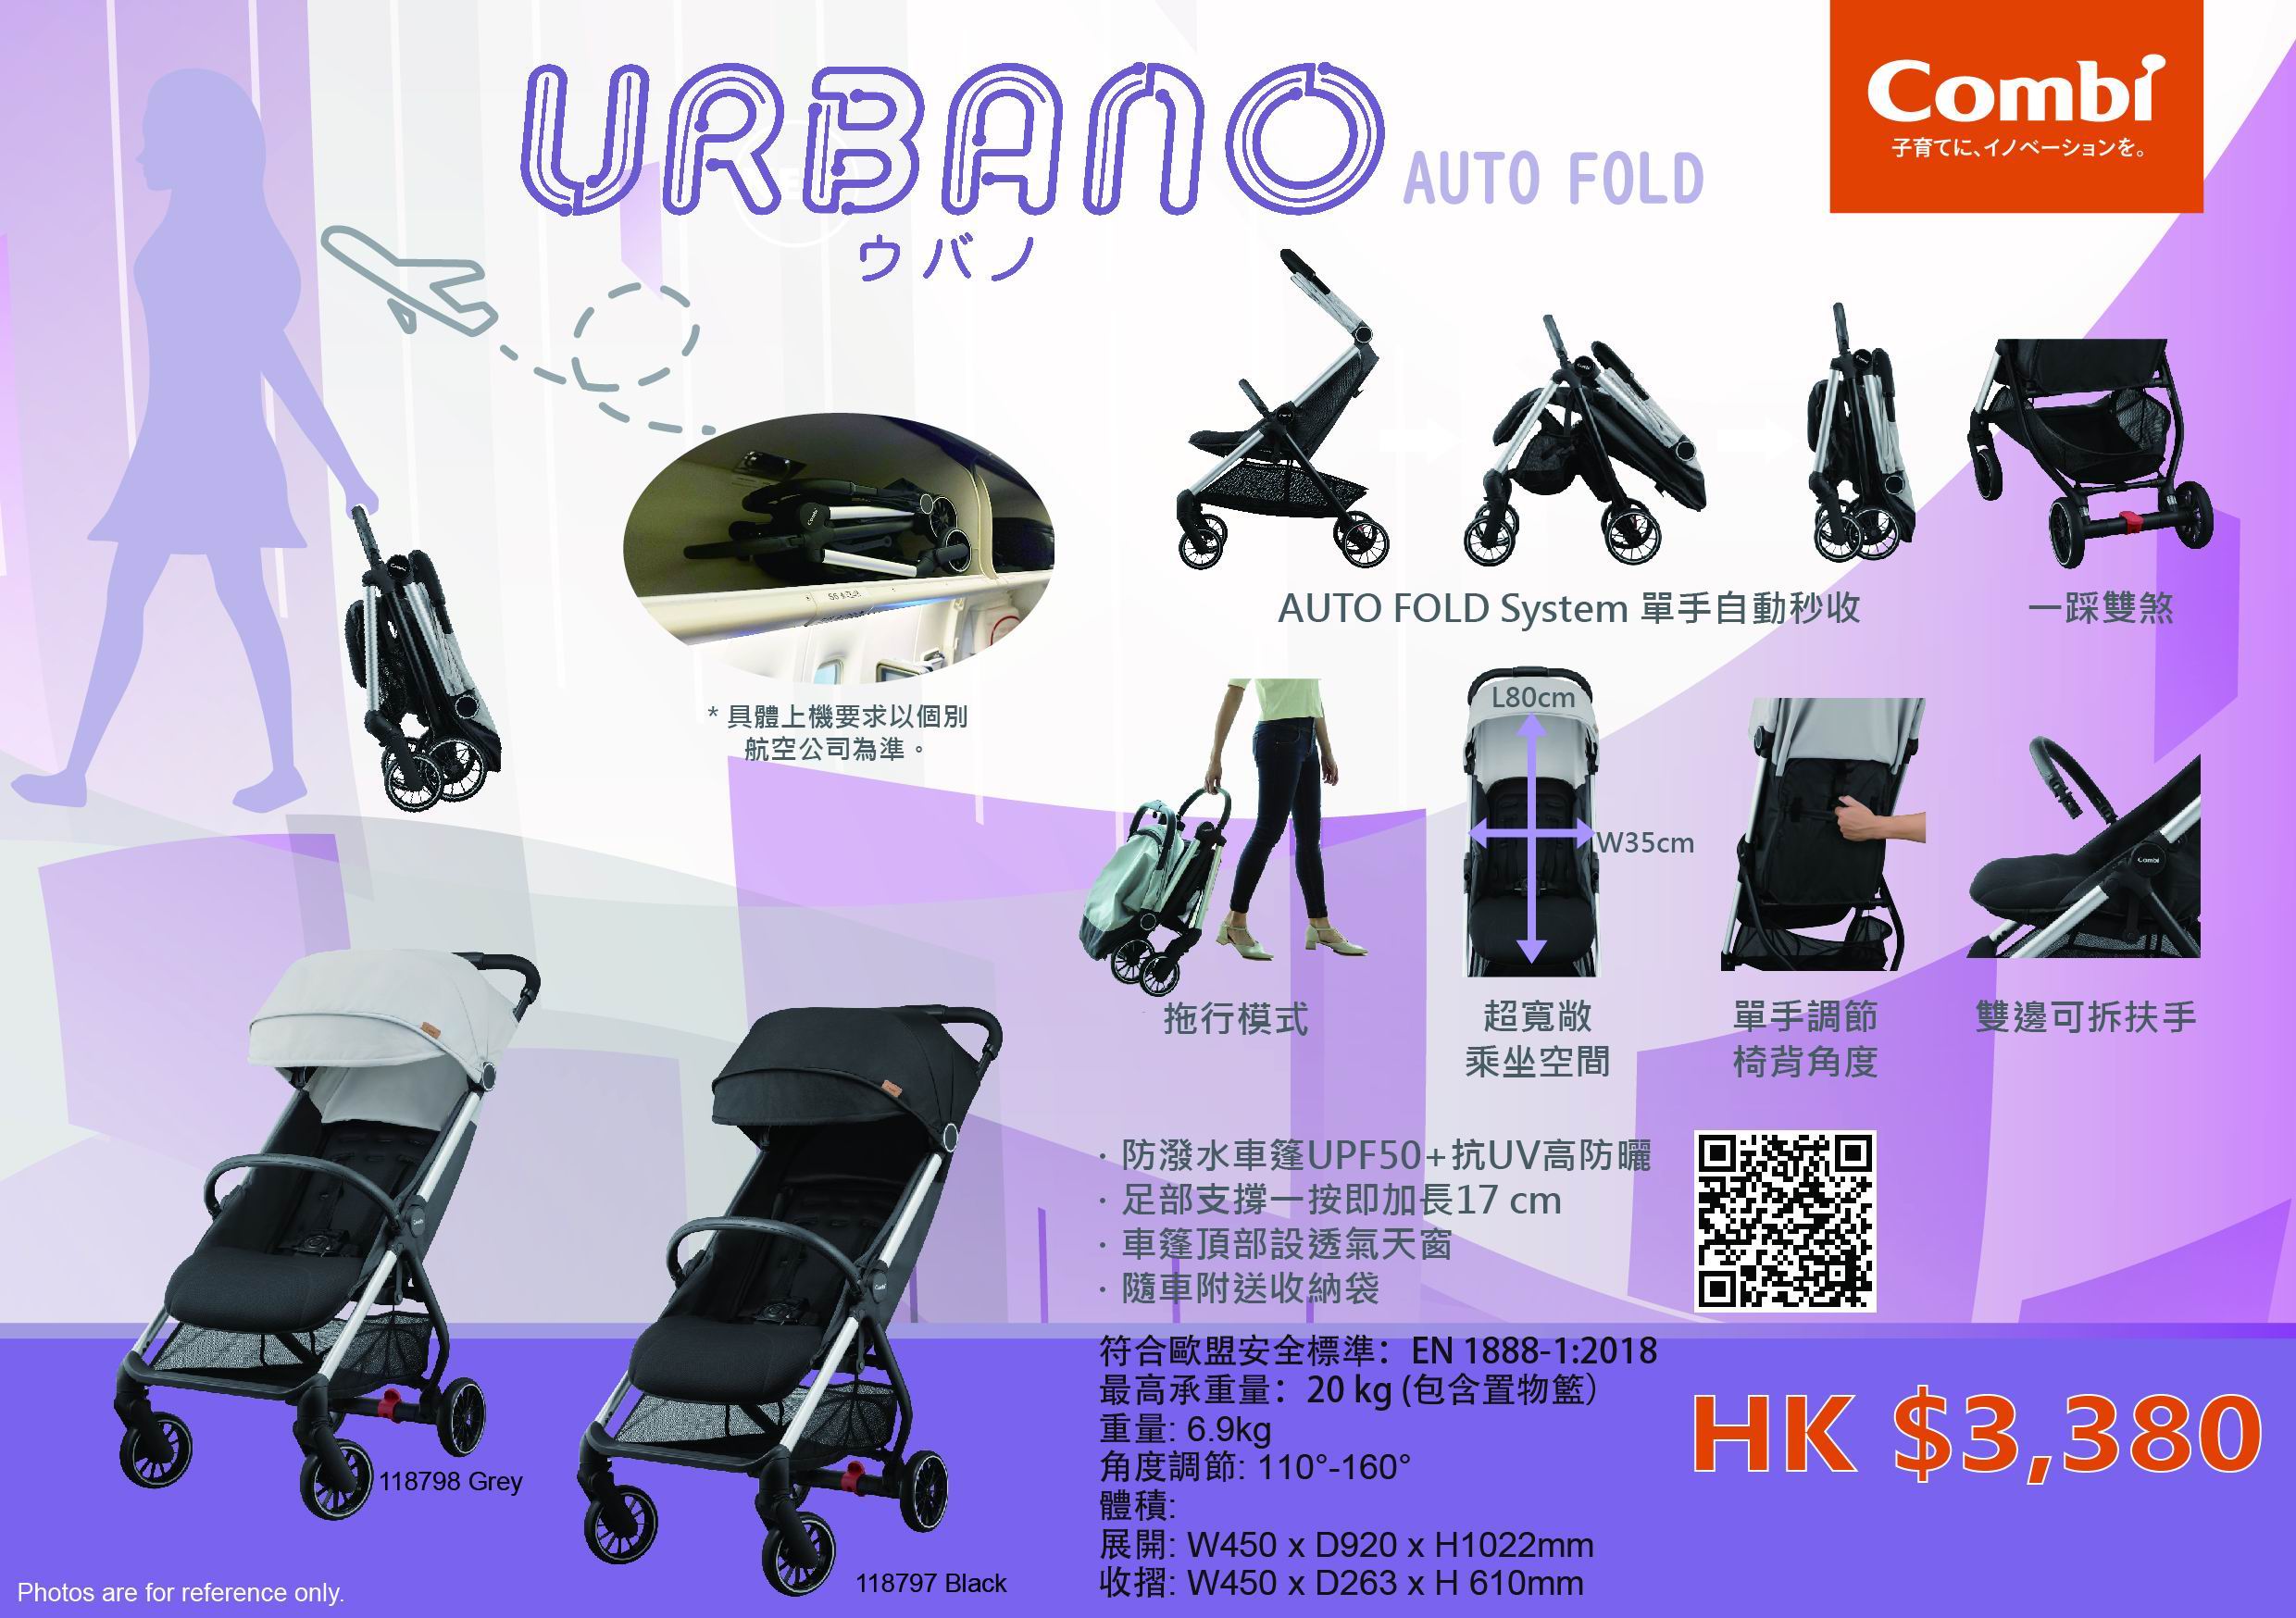 Combi Urbano 自動收摺嬰兒手推車